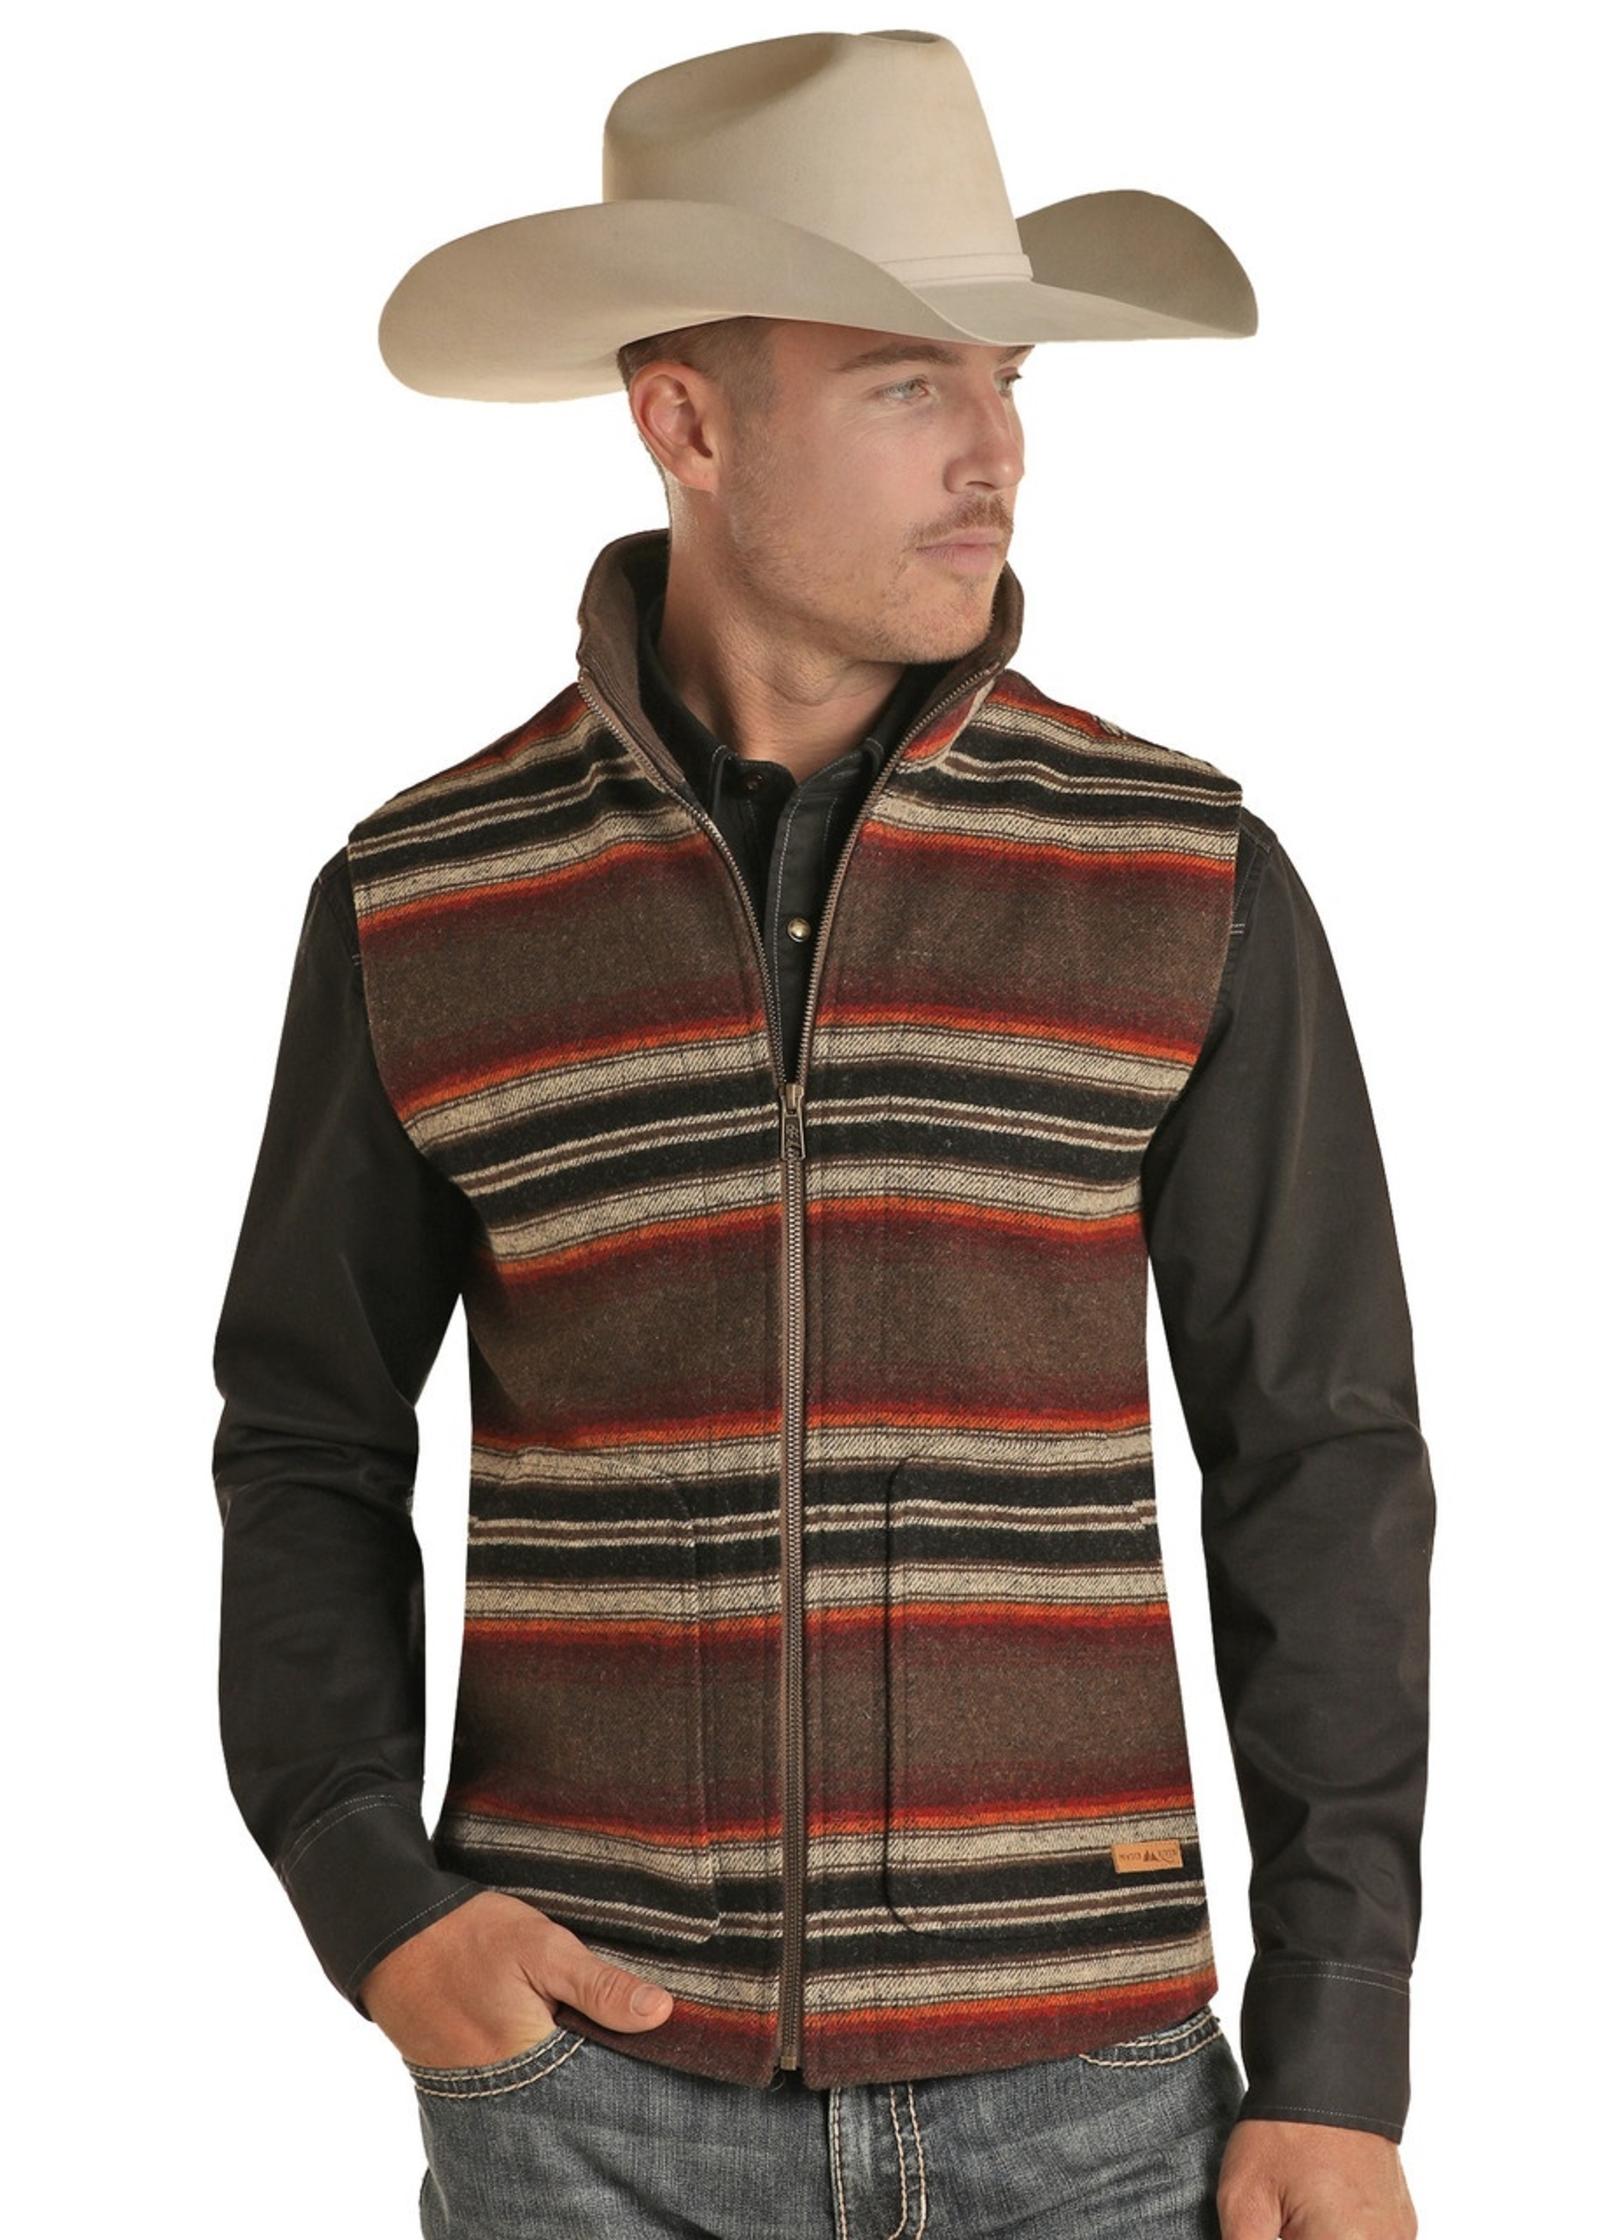 Powder River Striped Vest